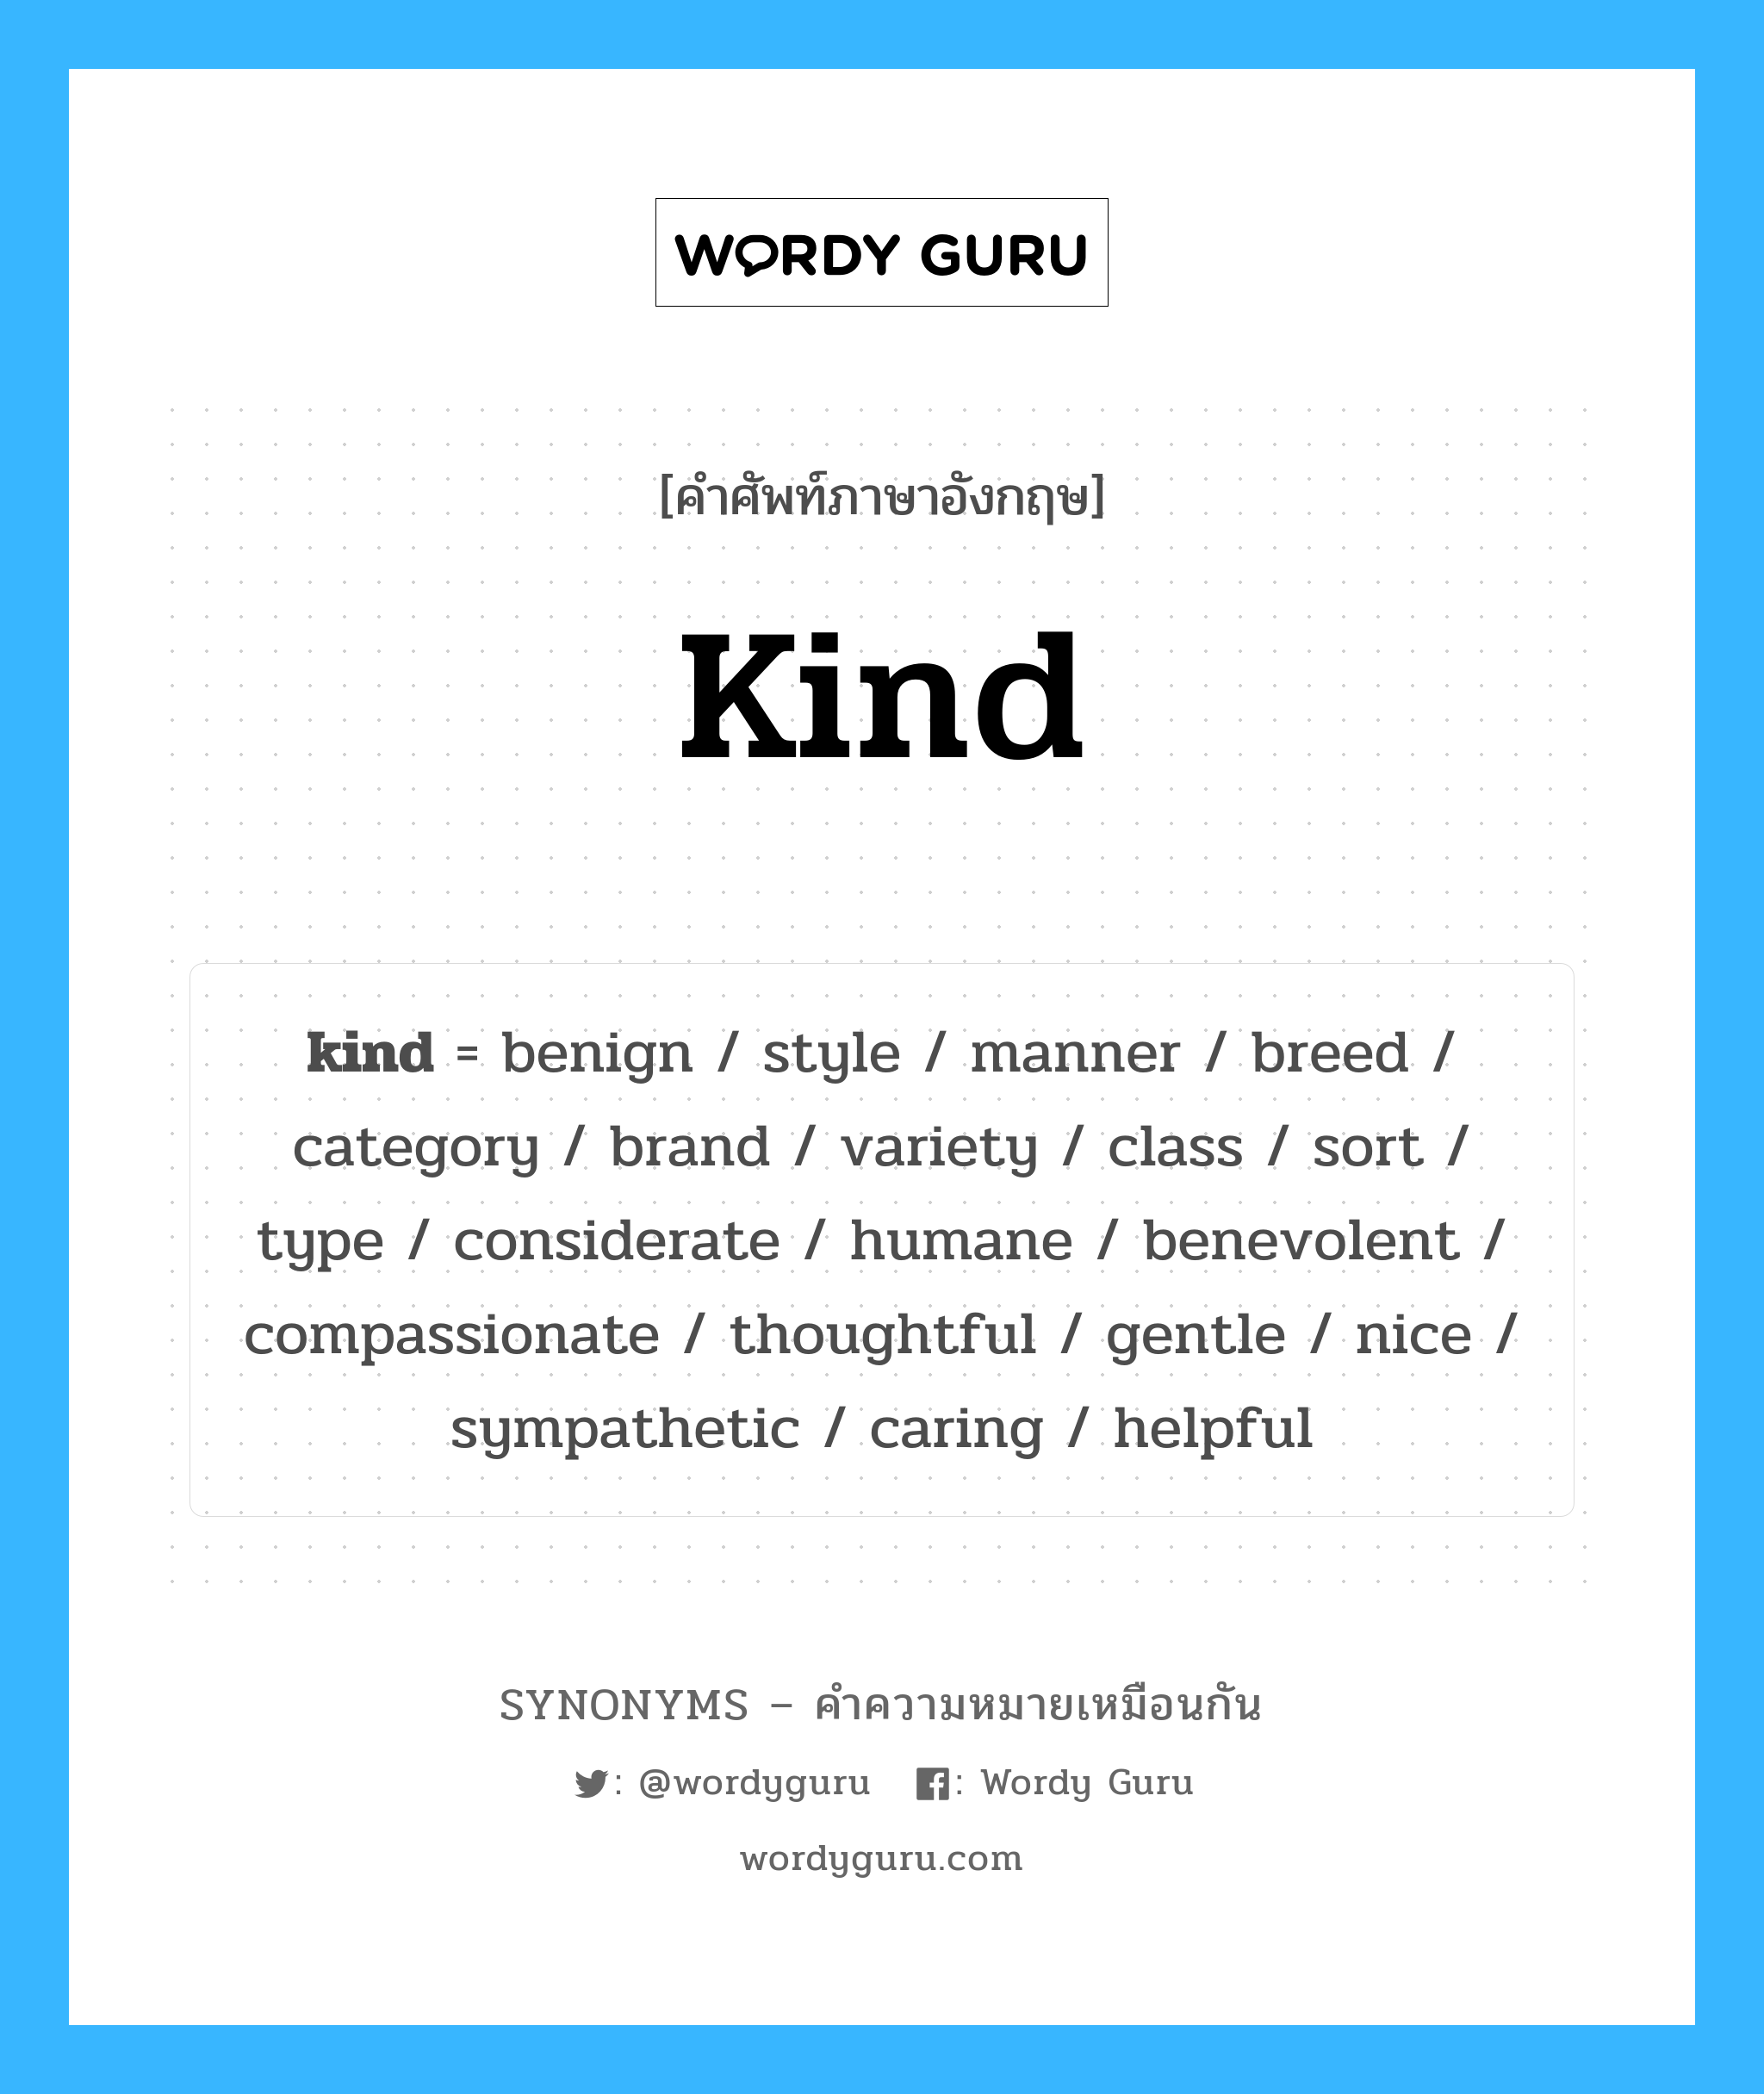 brand เป็นหนึ่งใน kind และมีคำอื่น ๆ อีกดังนี้, คำศัพท์ภาษาอังกฤษ brand ความหมายคล้ายกันกับ kind แปลว่า แบรนด์ หมวด kind